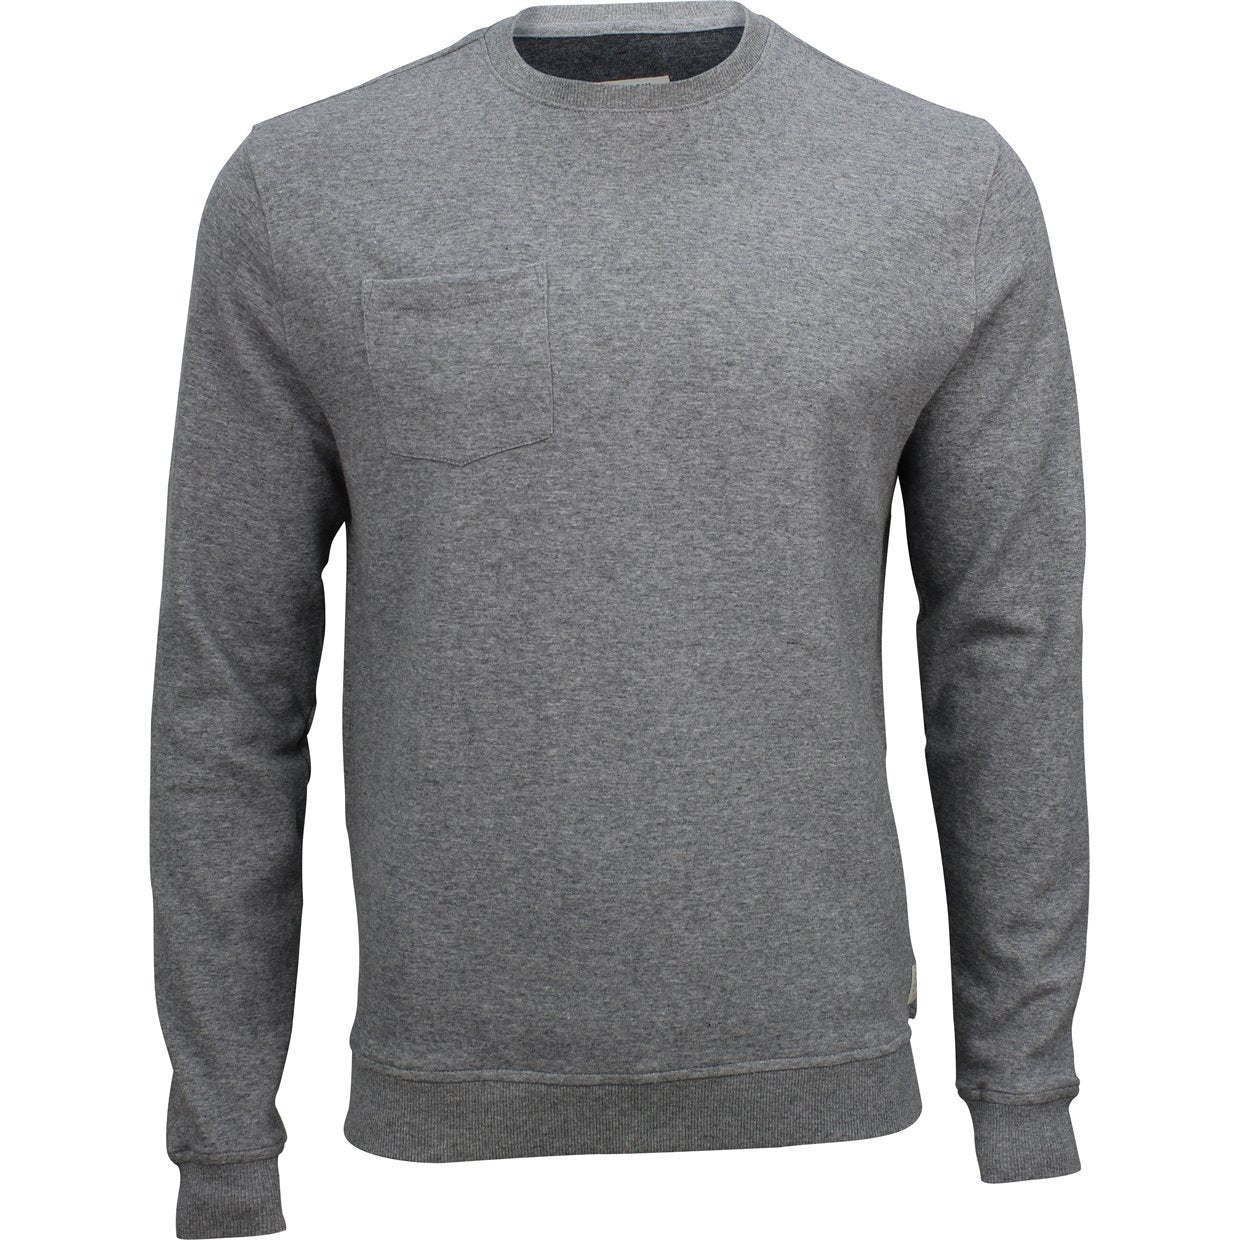 linksoul pocket crewneck sweatshirt outerwear bacc60e2 70f2 4723 97f6 7614174e9391